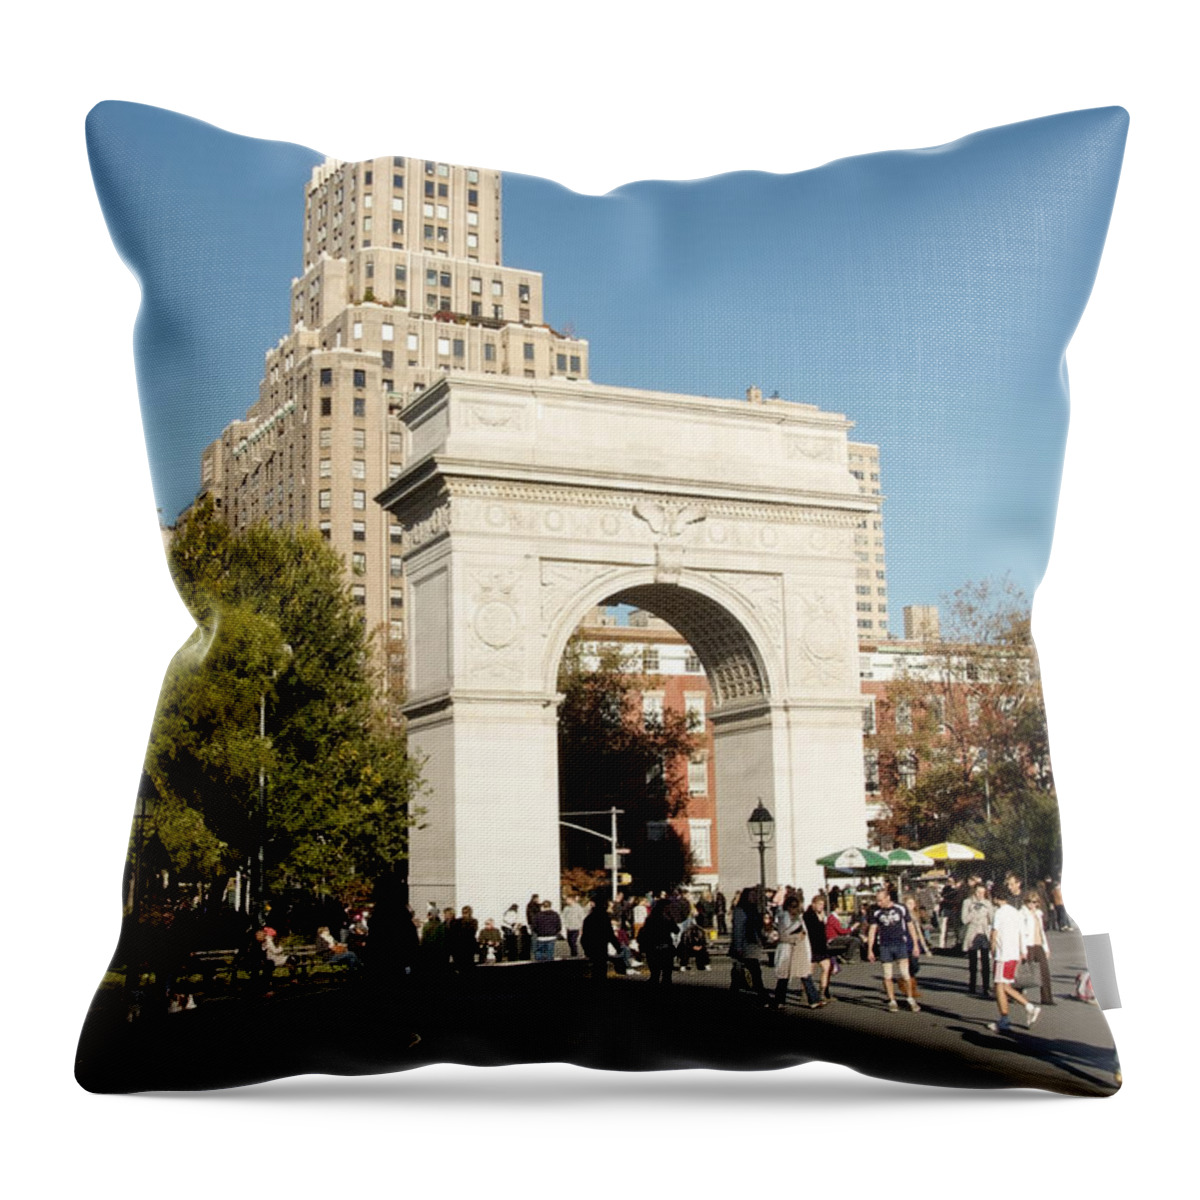 Washington Square Arch Throw Pillow featuring the photograph Washington Square Arch by Michael Dorn